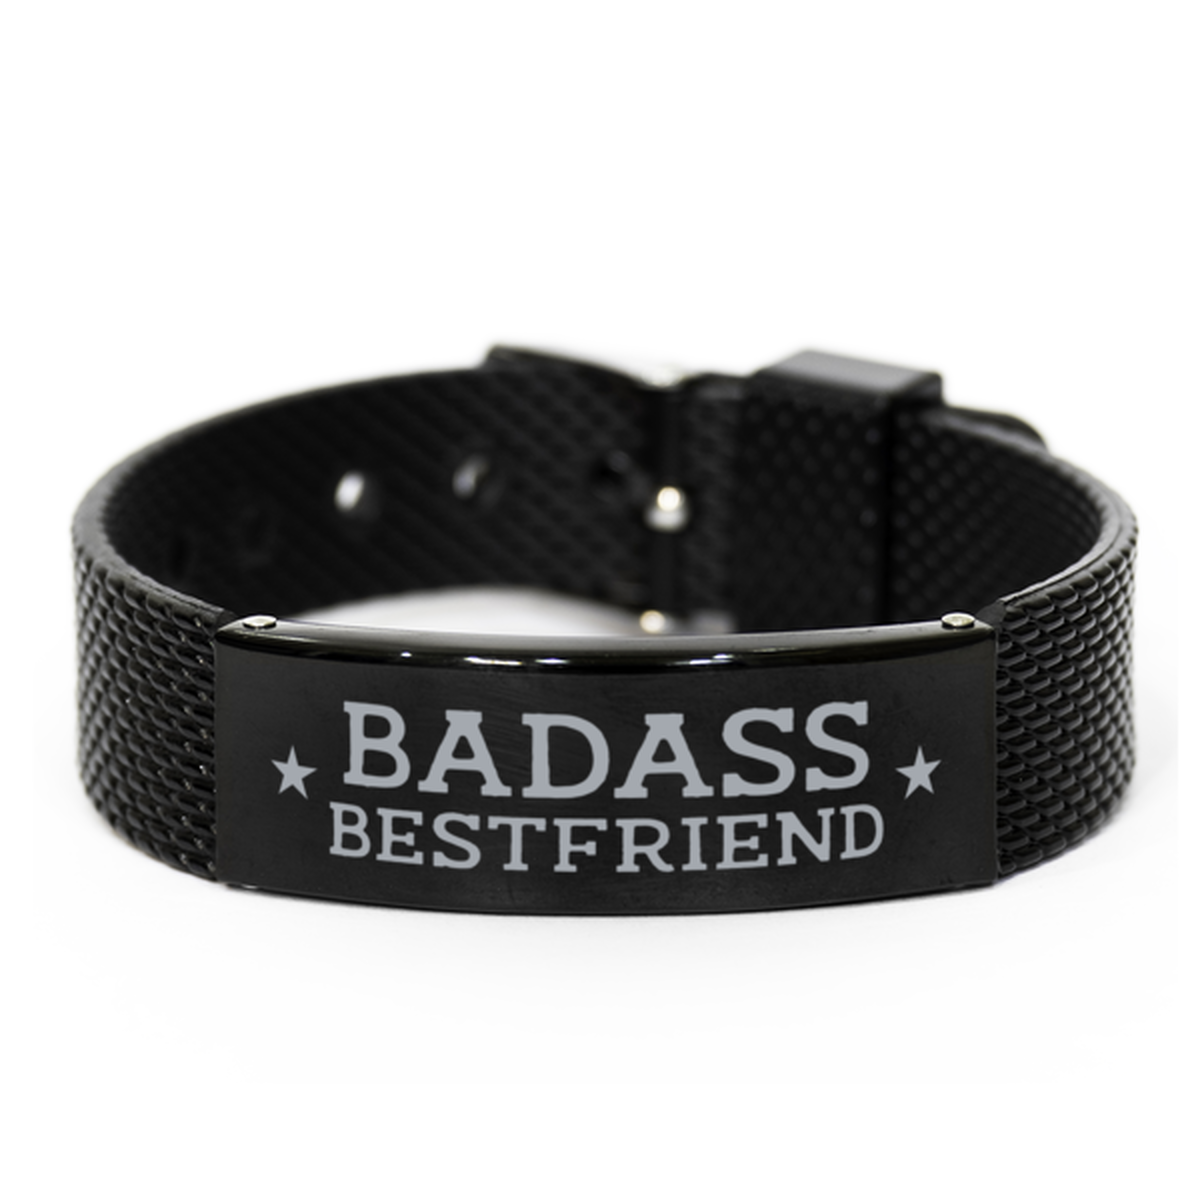 Bestfriend Black Shark Mesh Bracelet, Badass Bestfriend, Funny Family Gifts For Bestfriend From Friends